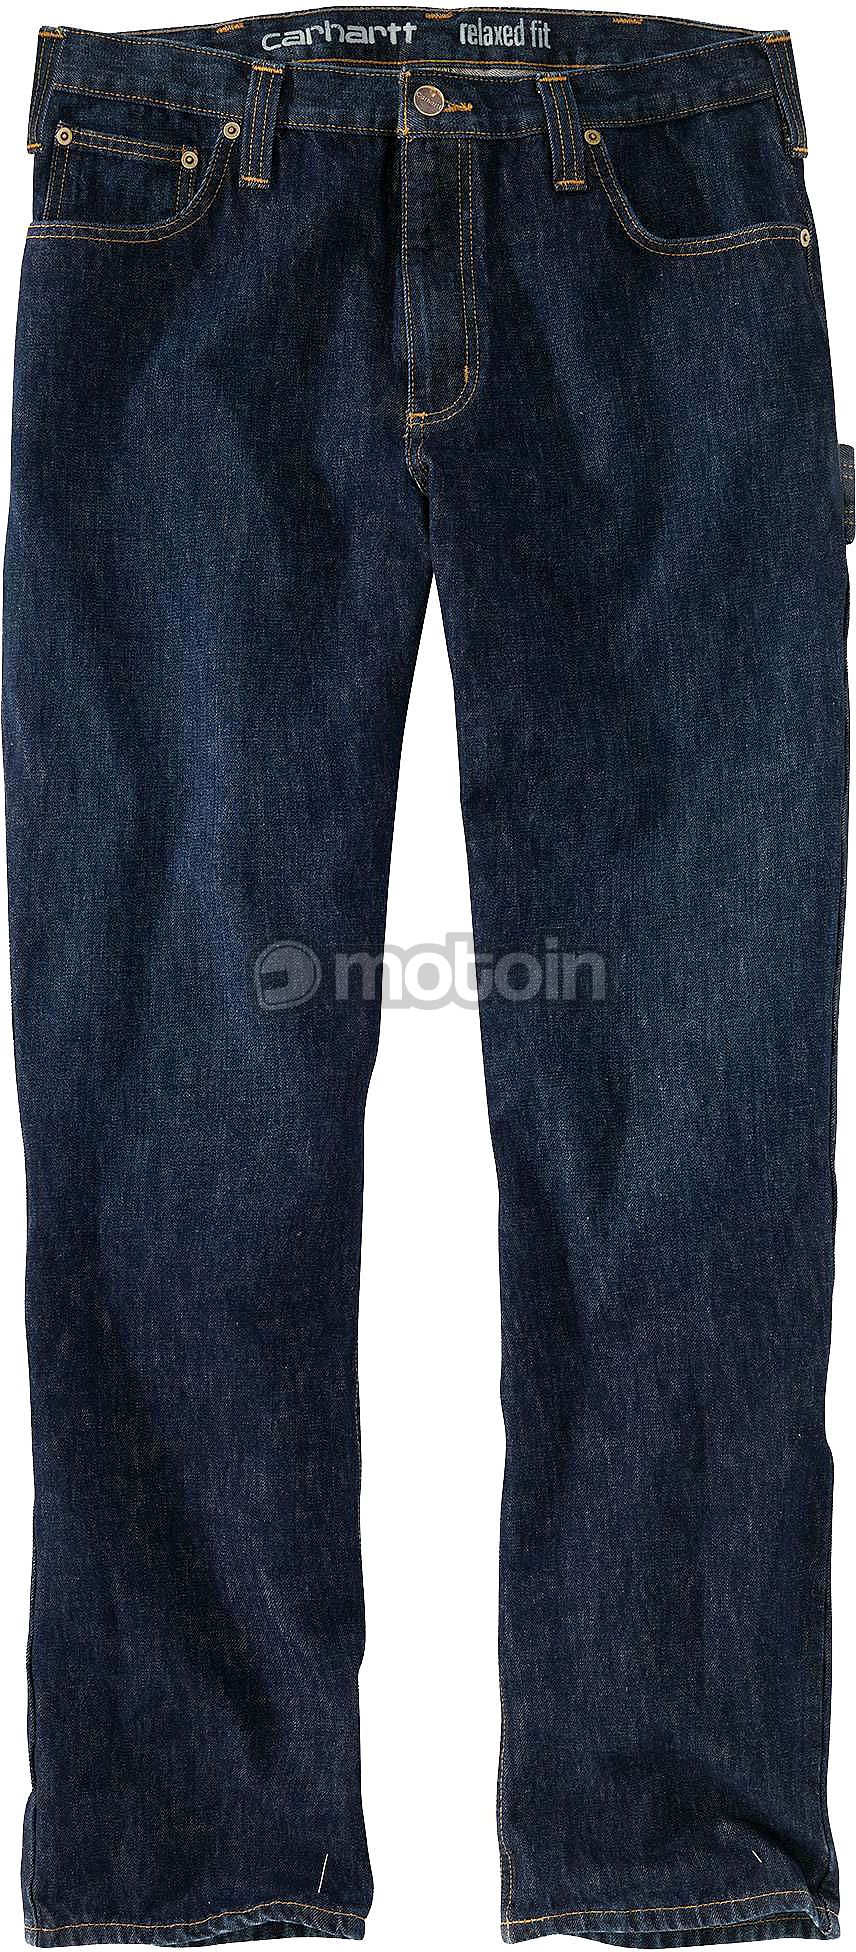 Carhartt Rugged Flex, jeans